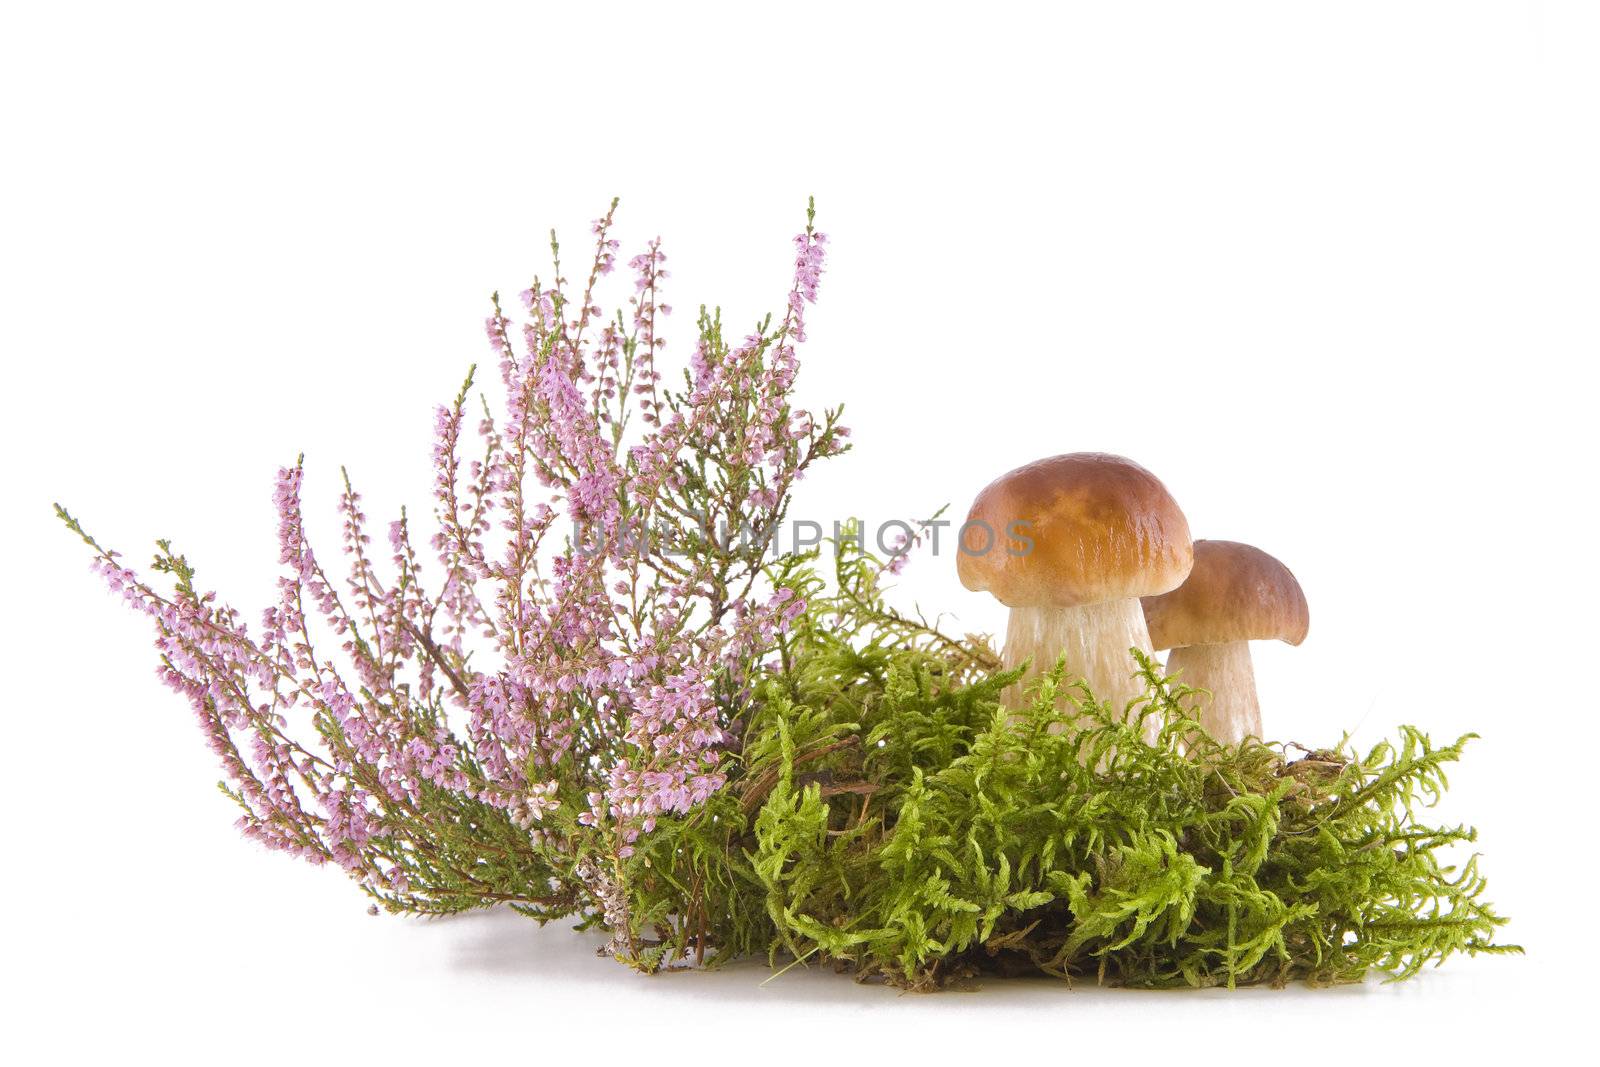 Two fresh mushrooms by Gbuglok